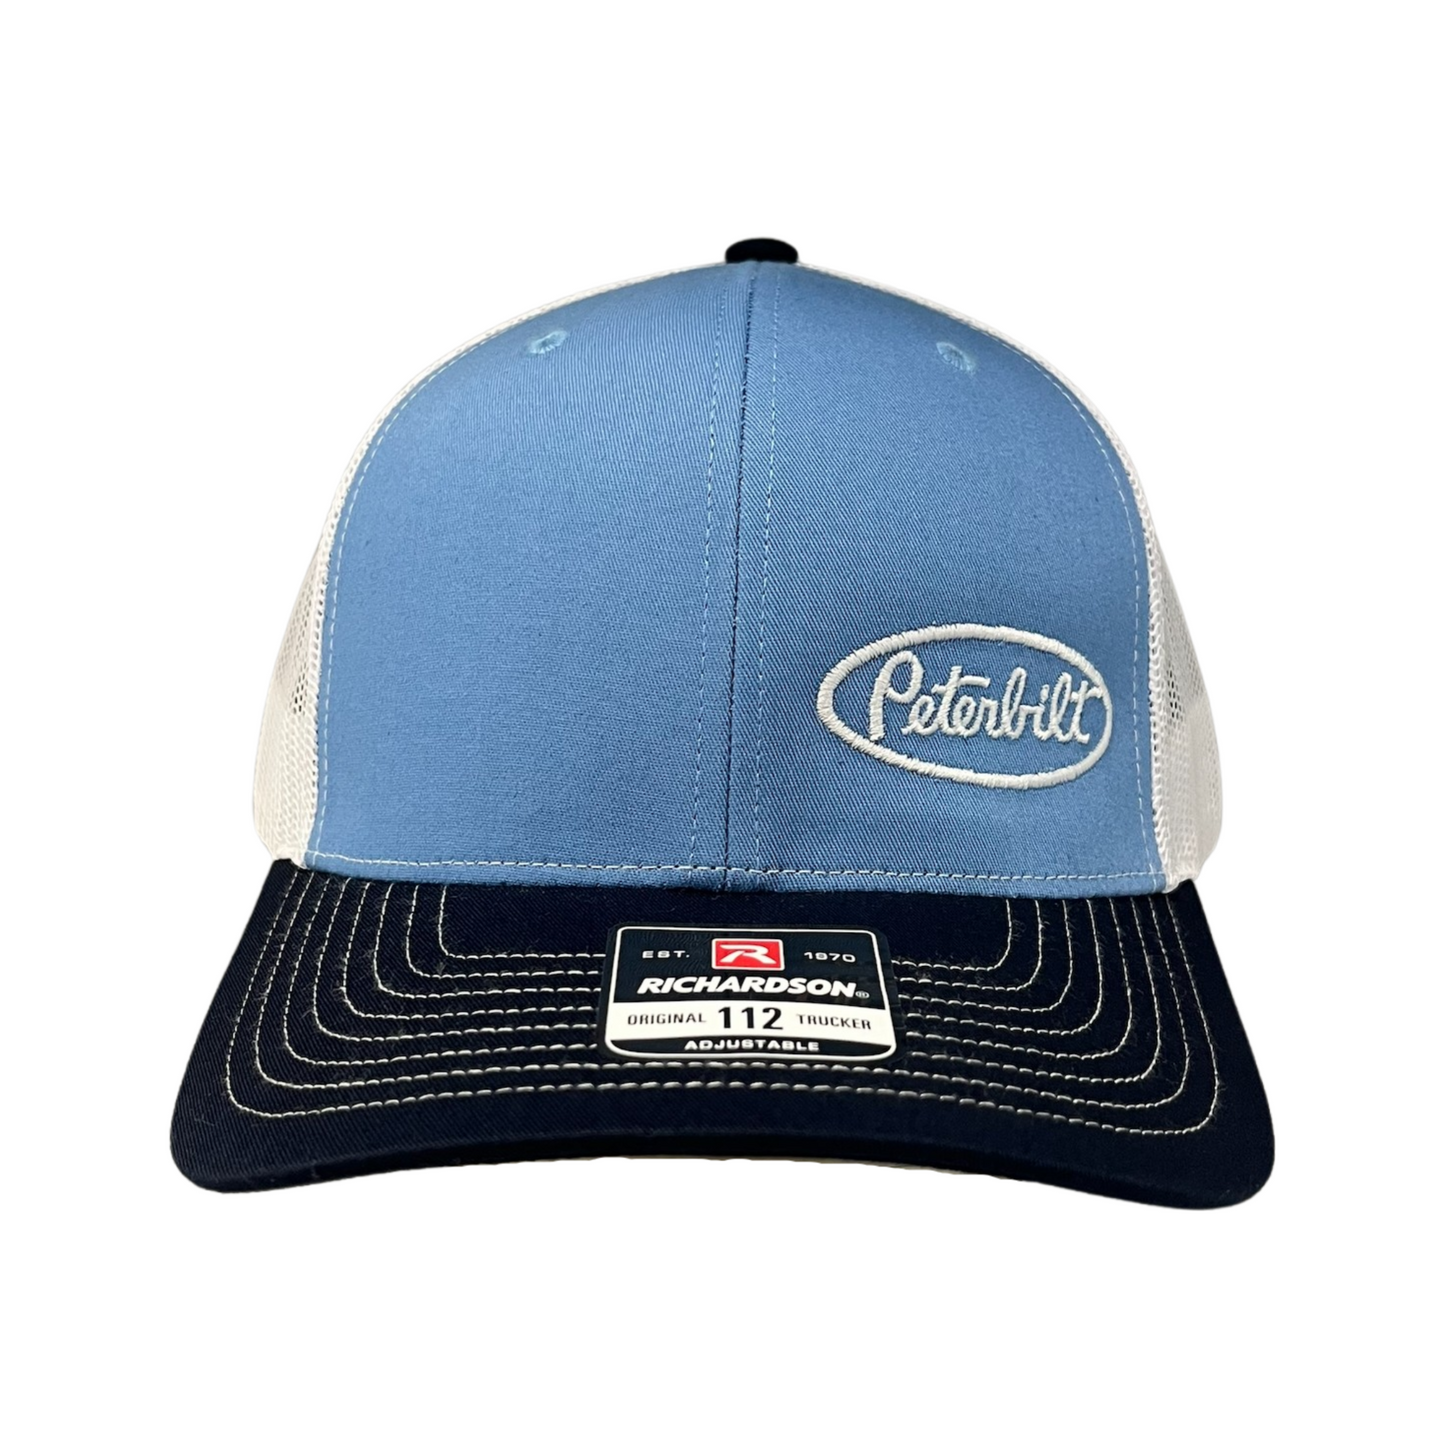 Classic Light Blue, Navy, and White Logo Trucker Cap